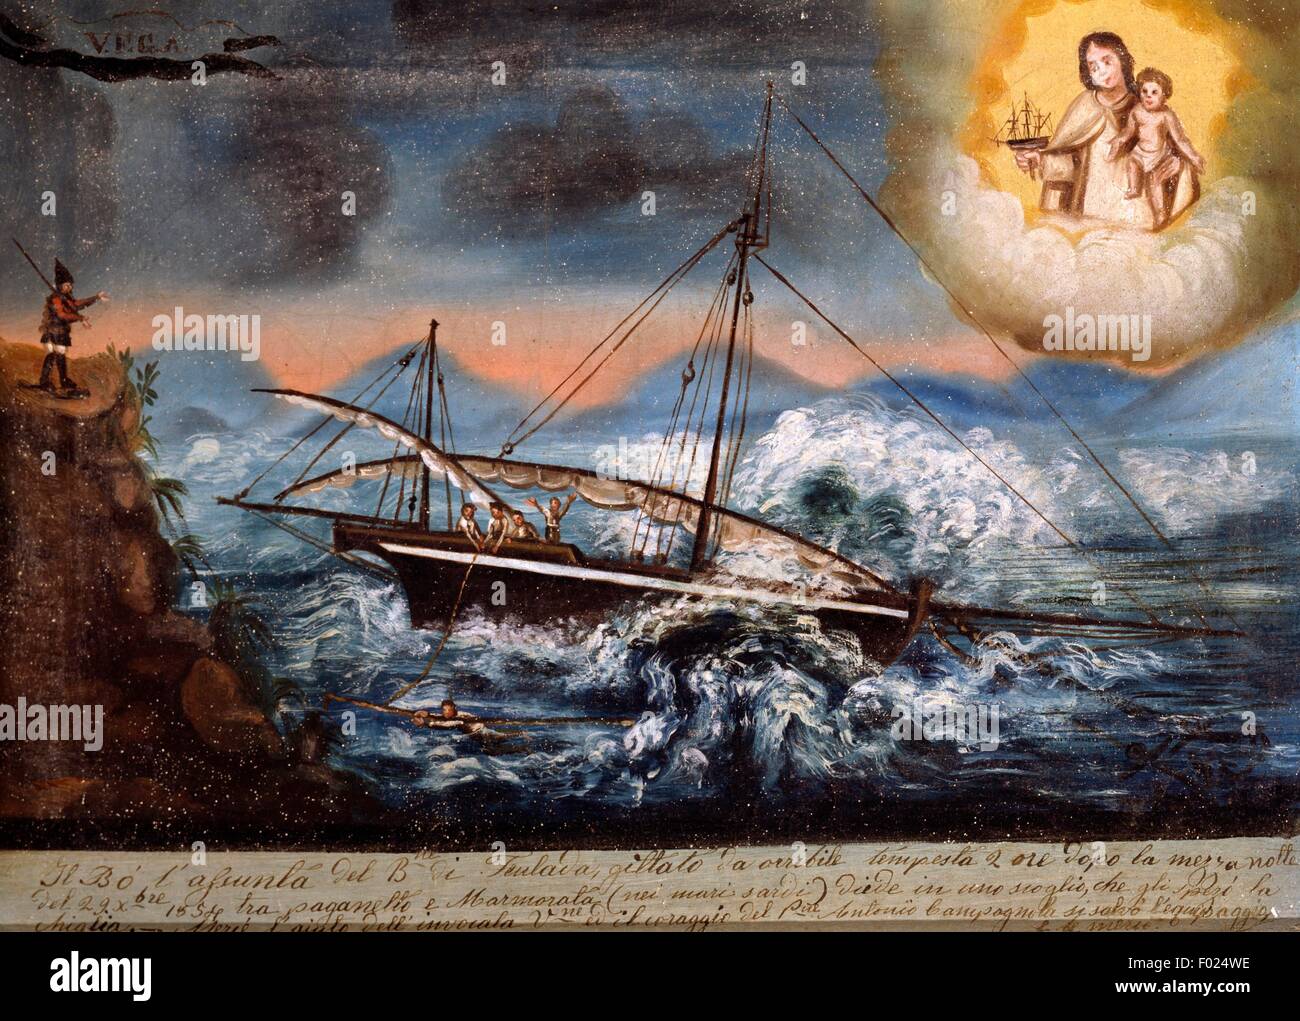 Sailing ship on a stormy sea, seafaring ex voto, Italy, 1854. Stock Photo